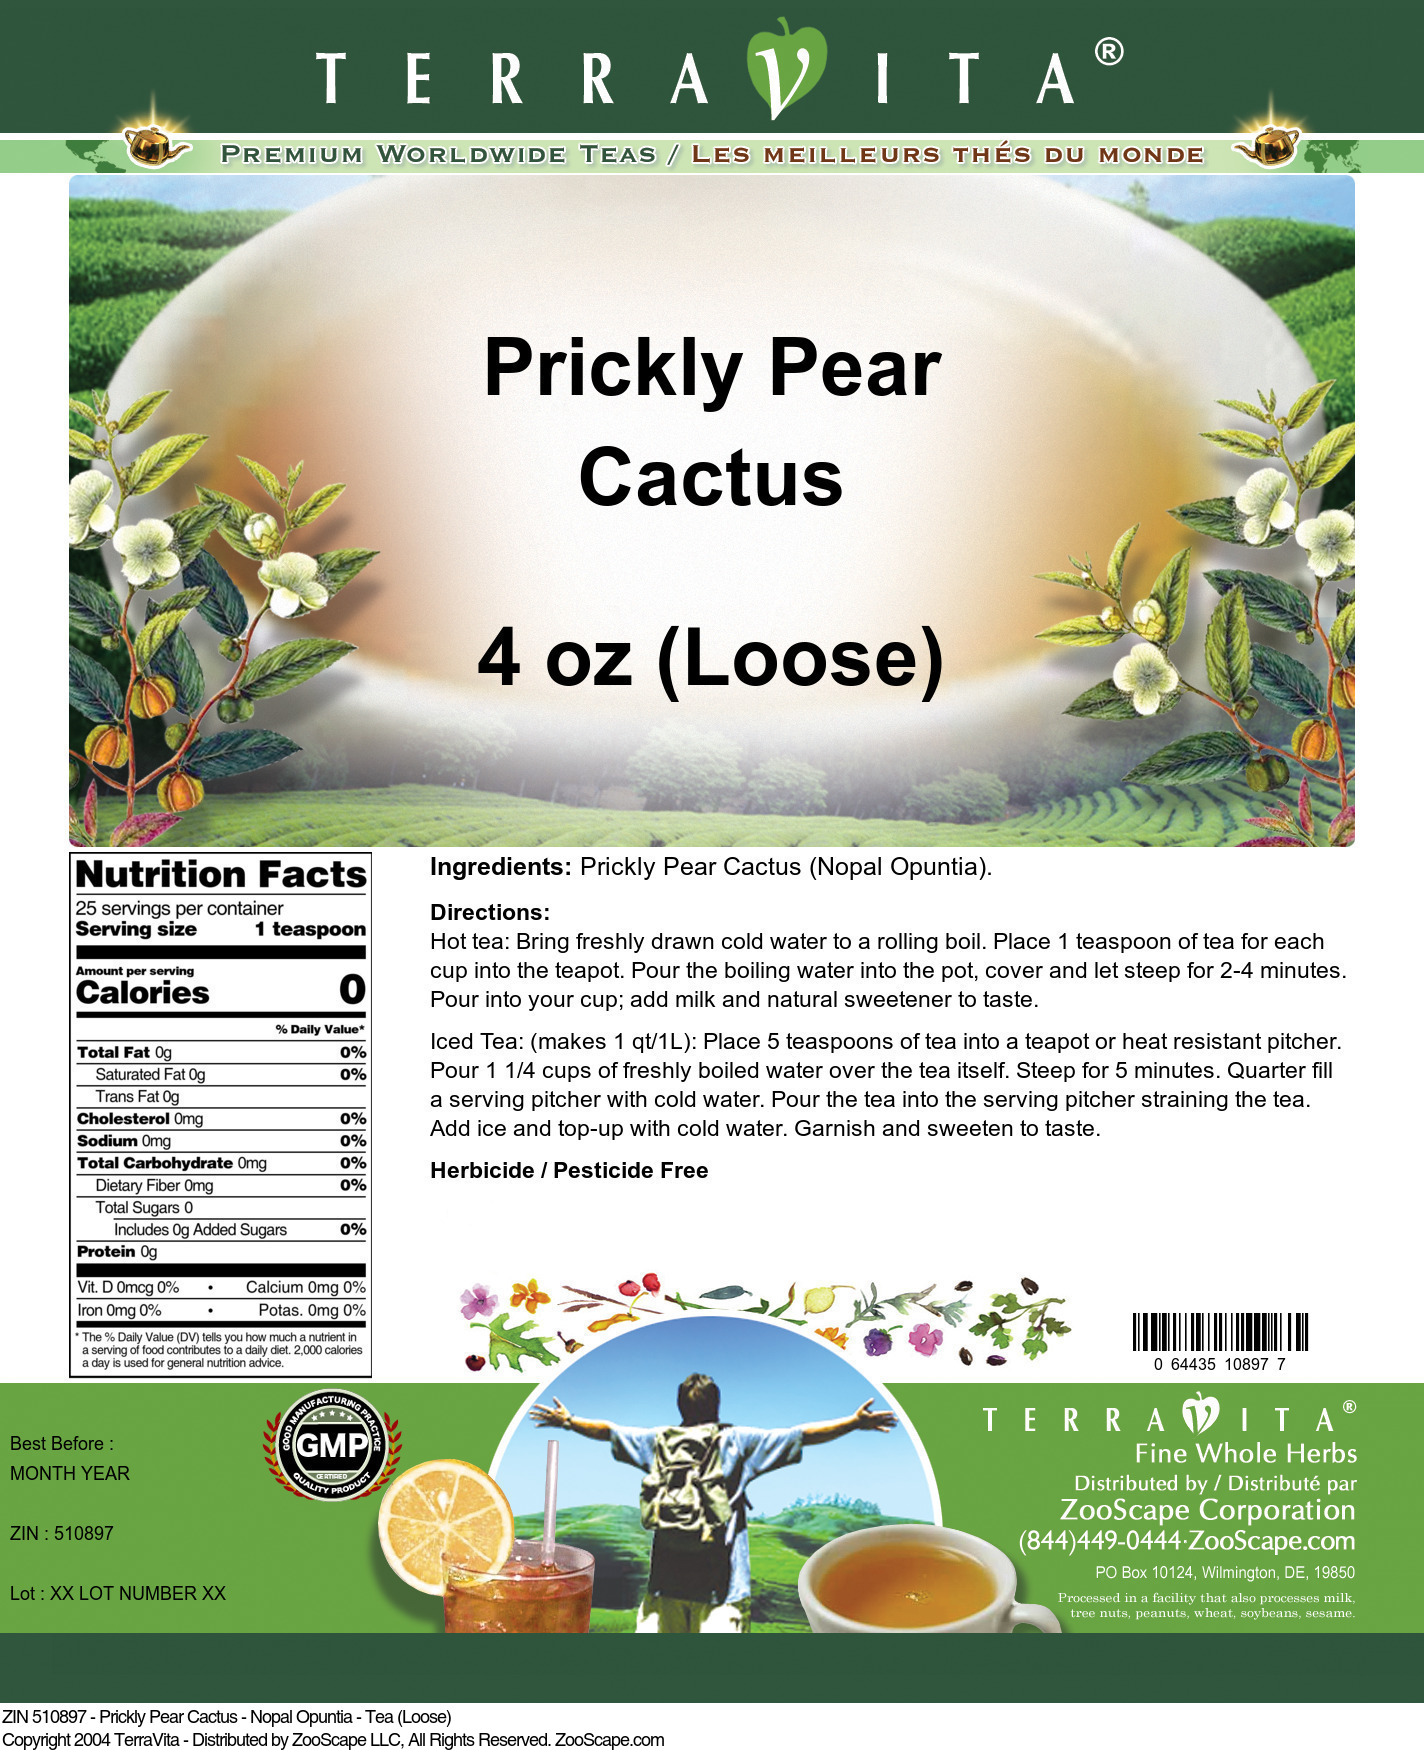 Prickly Pear Cactus - Nopal Opuntia - Tea (Loose) - Label